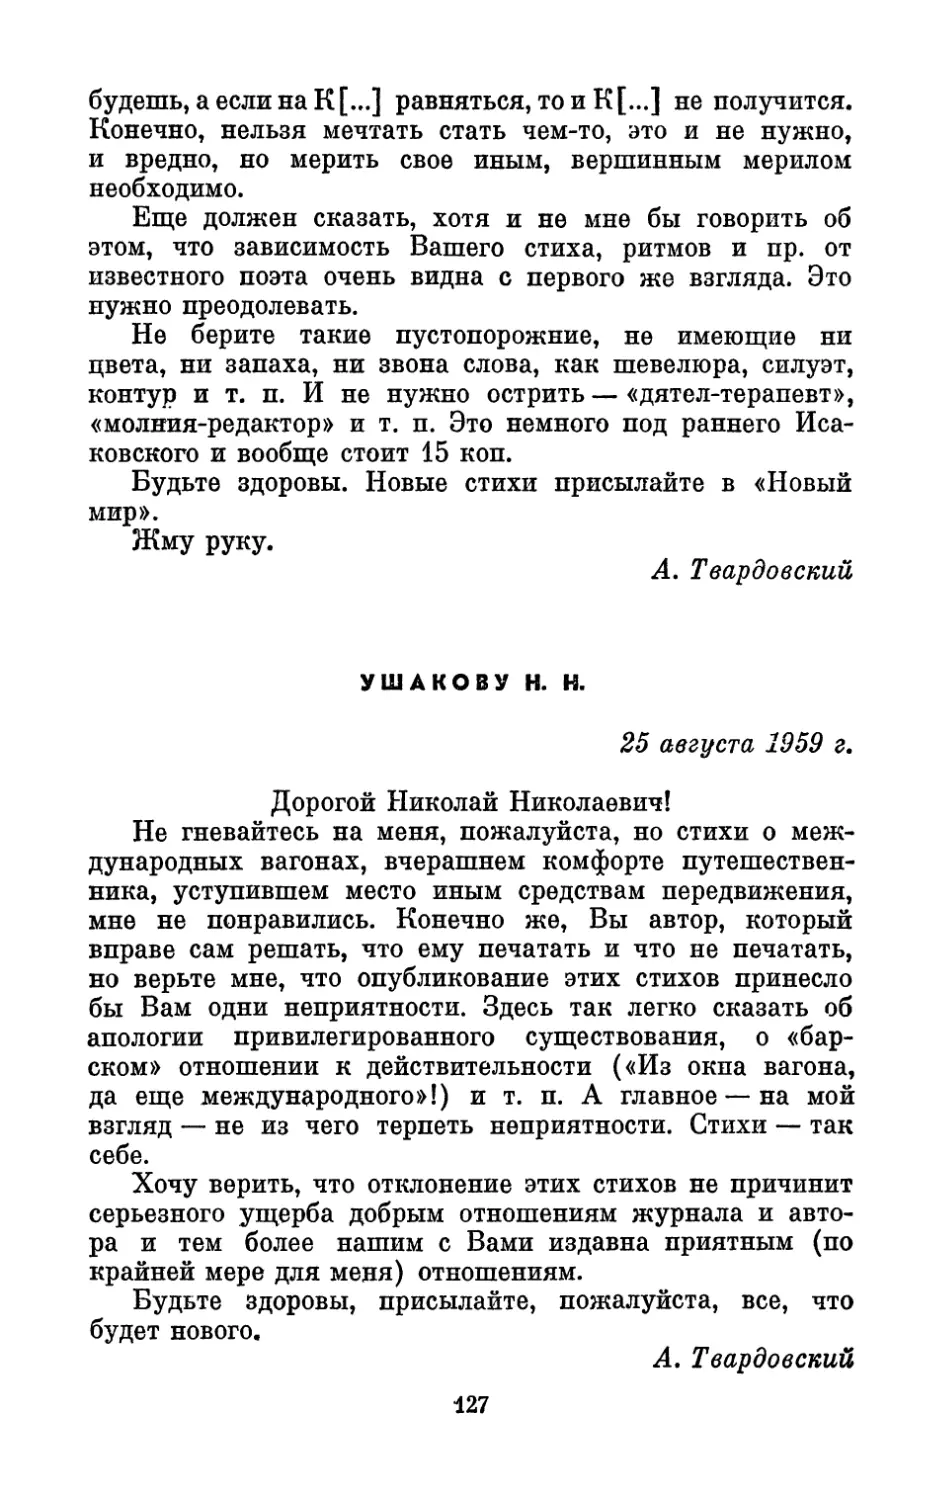 Ушакову Н. Н., 25 августа 1959 г.